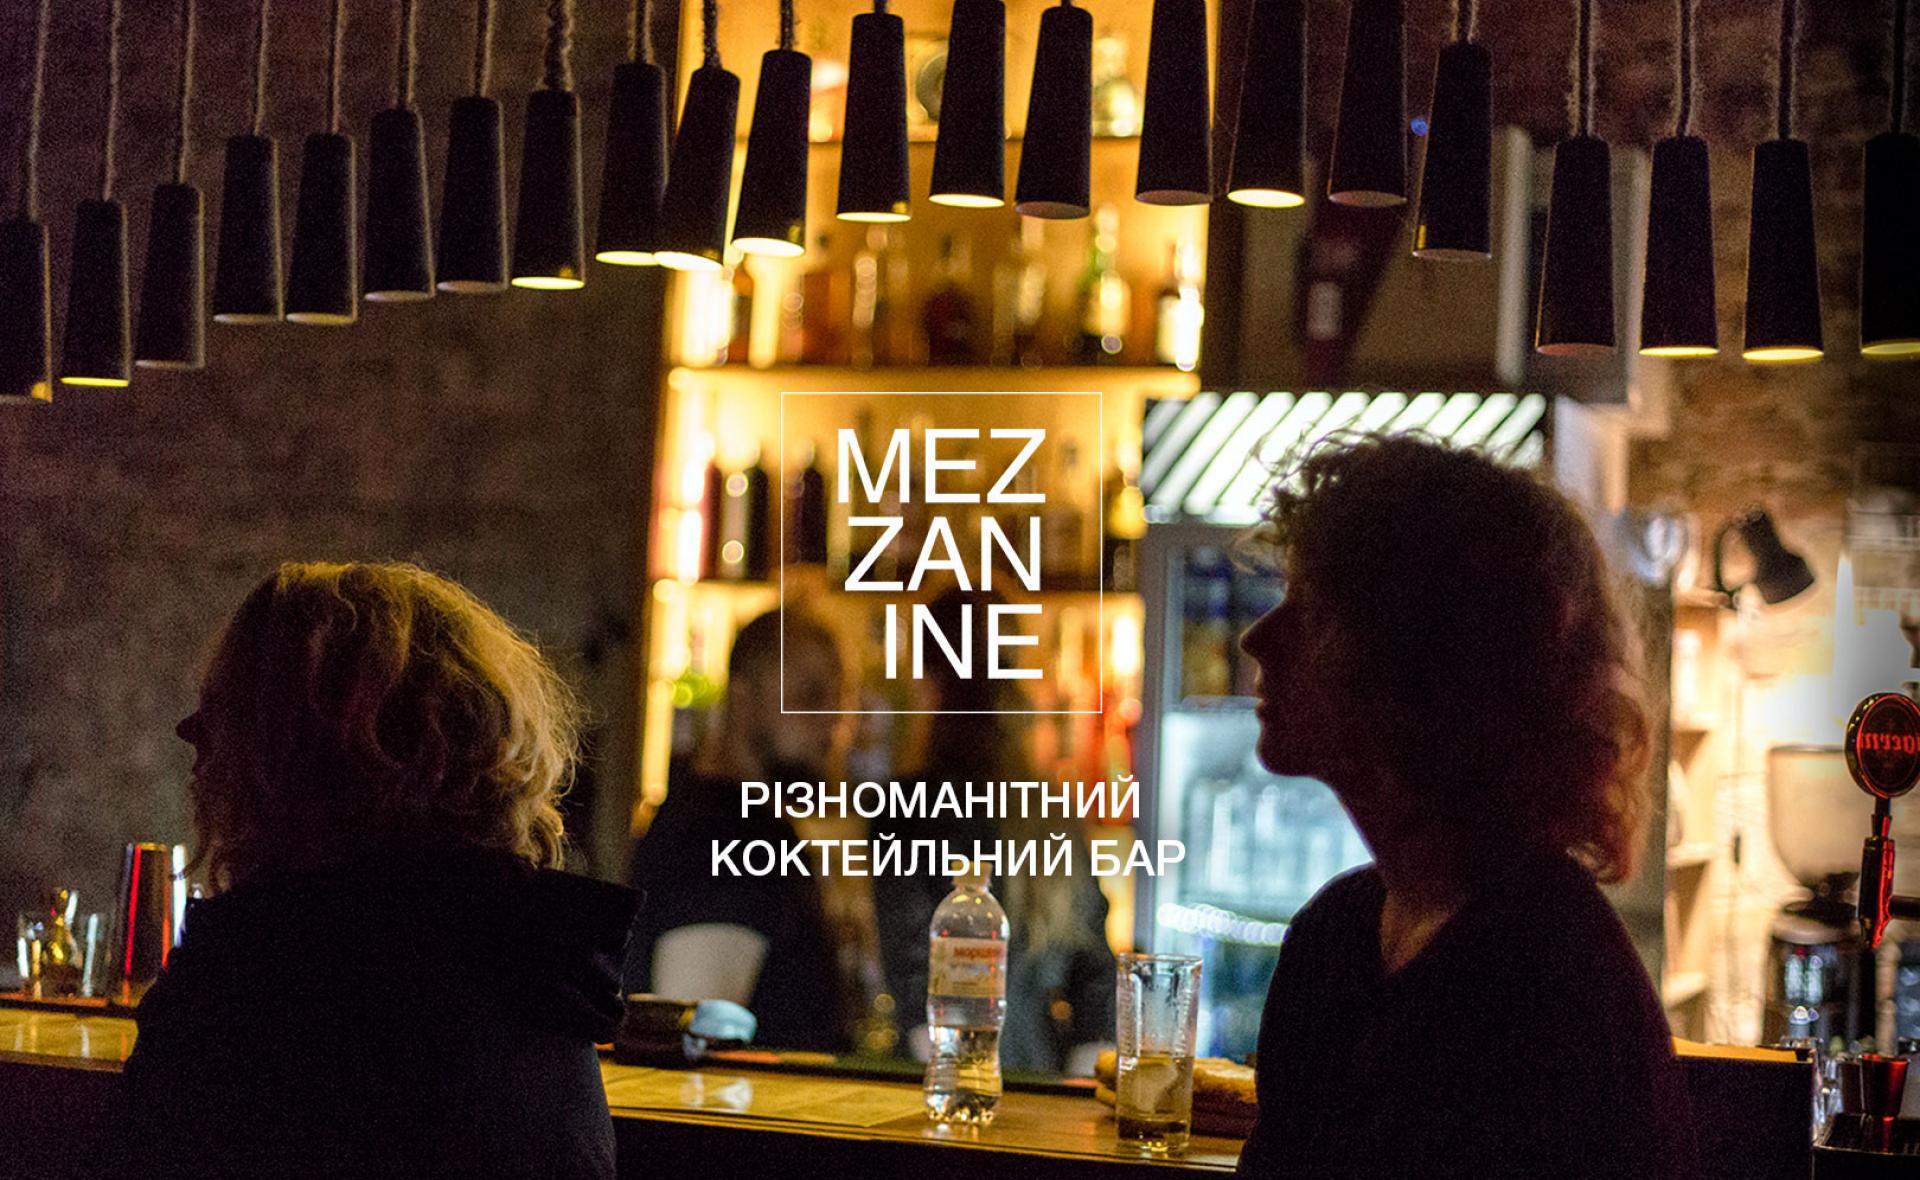 Bar Mezzanine